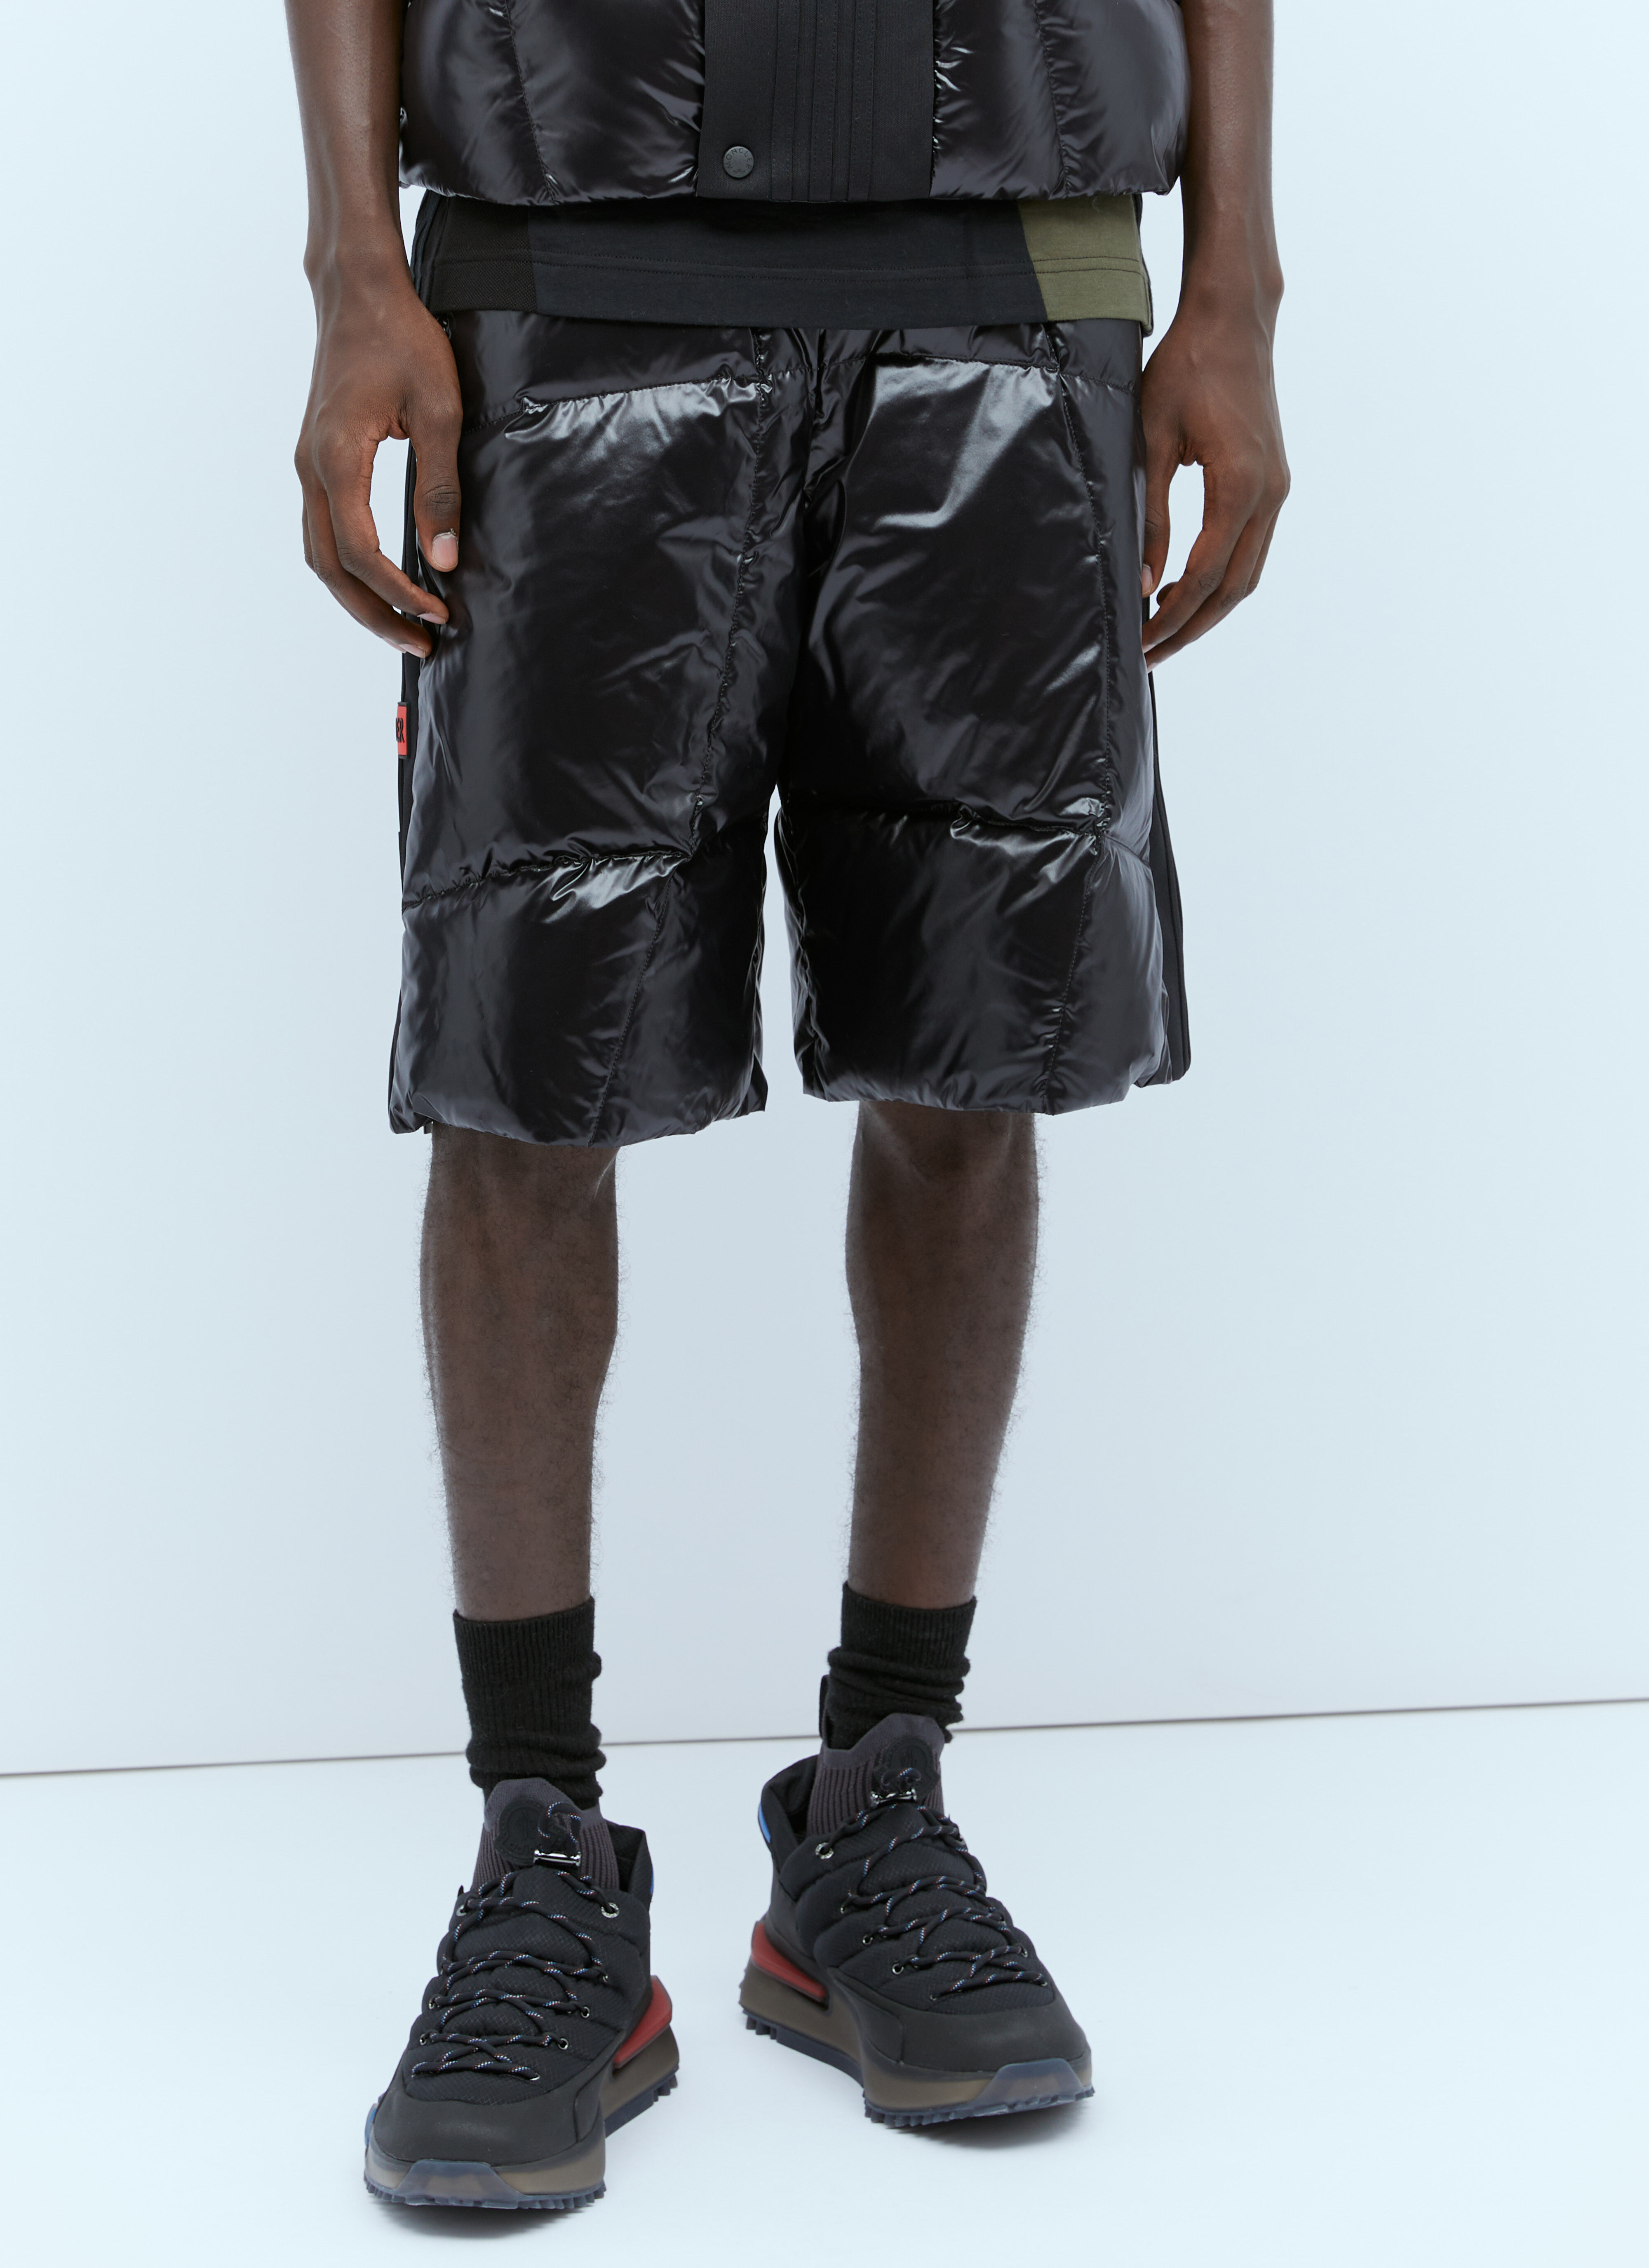 Moncler x Roc Nation designed by Jay-Z 다운 트랙 쇼츠 블랙 mrn0156002